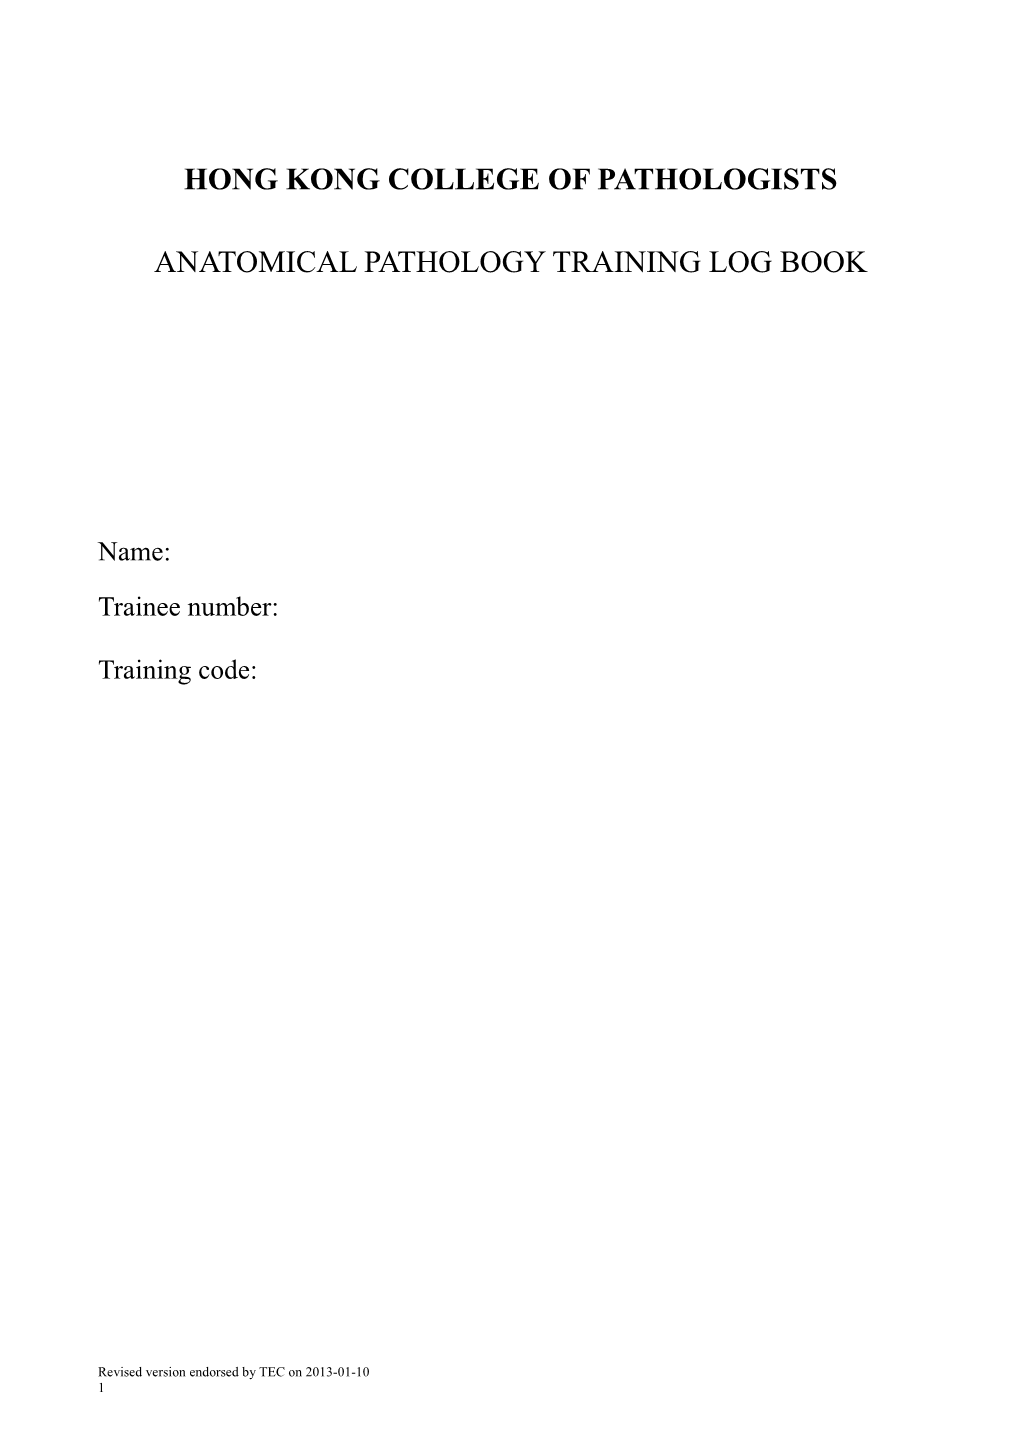 Anatomical Pathology Training Log Book